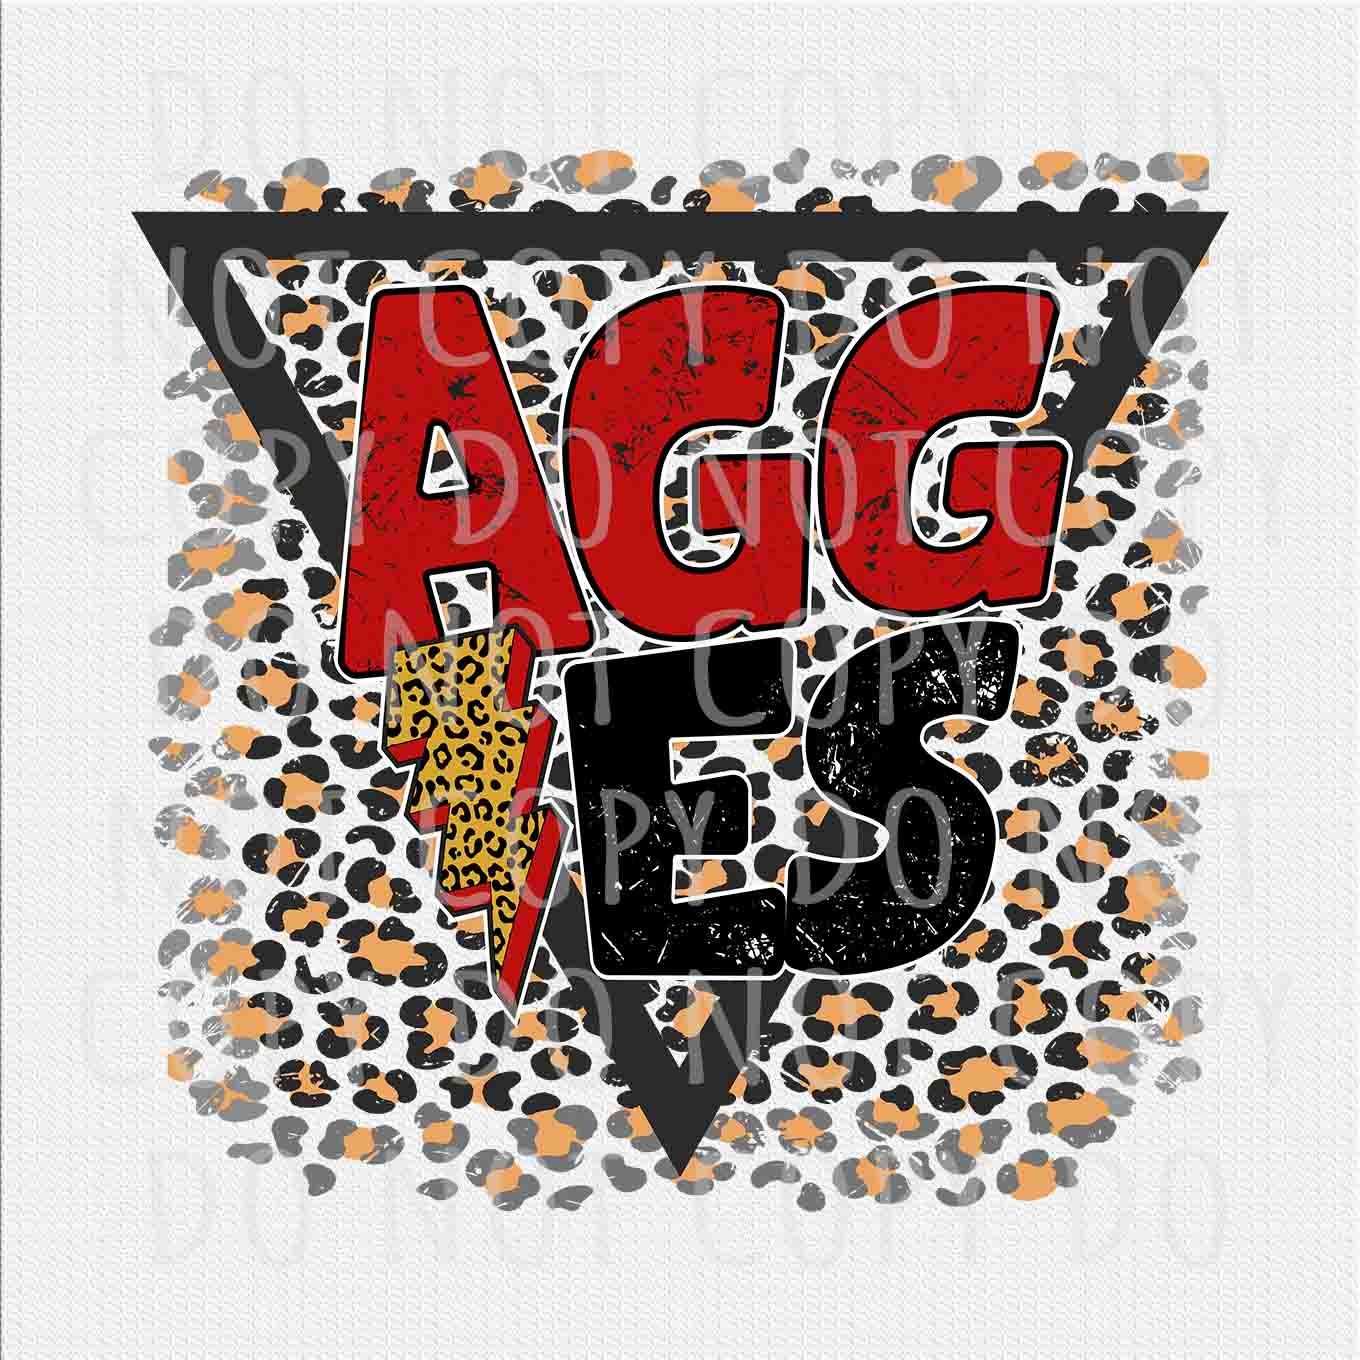 Aggies Team png, Aggies Team red and black Leopard Lightning Bolt design png, Digital download